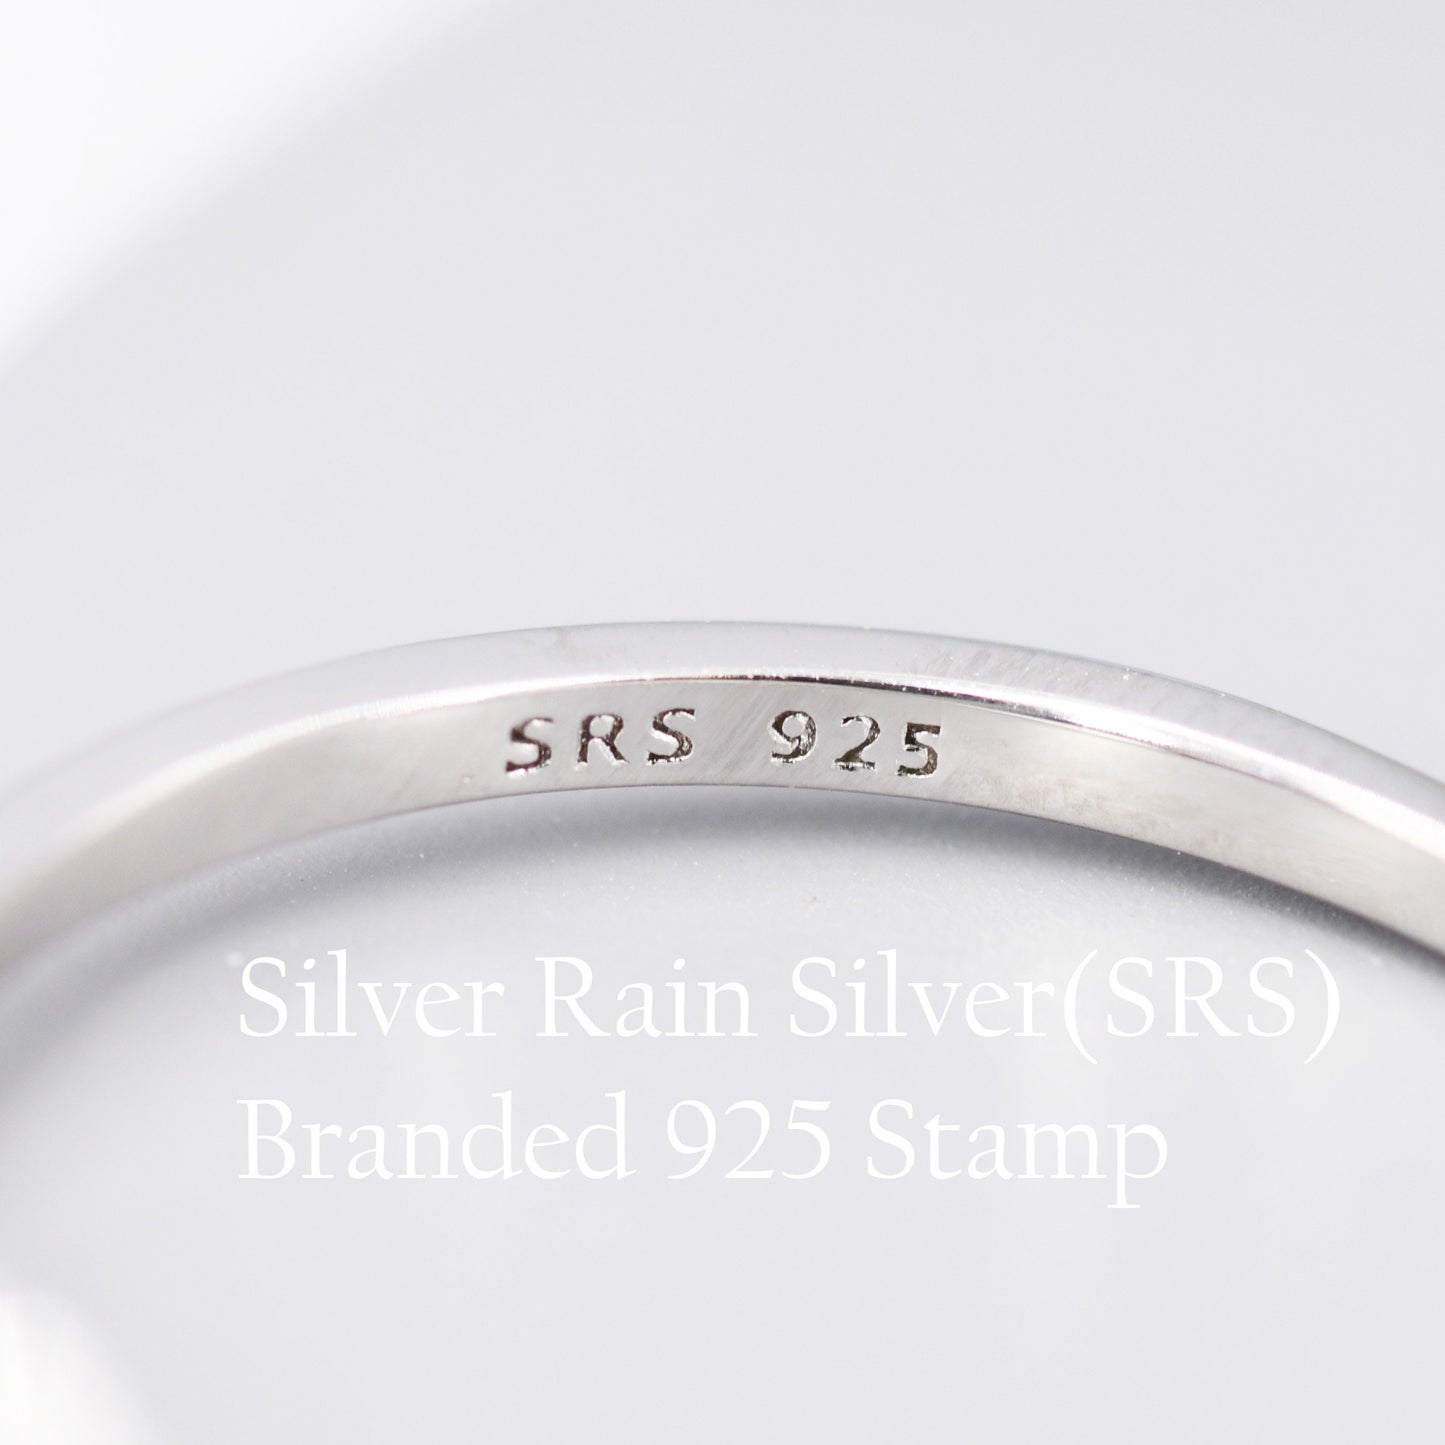 Natural Citrine Ring in Sterling Silver, Genuine Yellow Citrine Ring, Dainty Gemstone Ring, US 5-8, November Birthstone